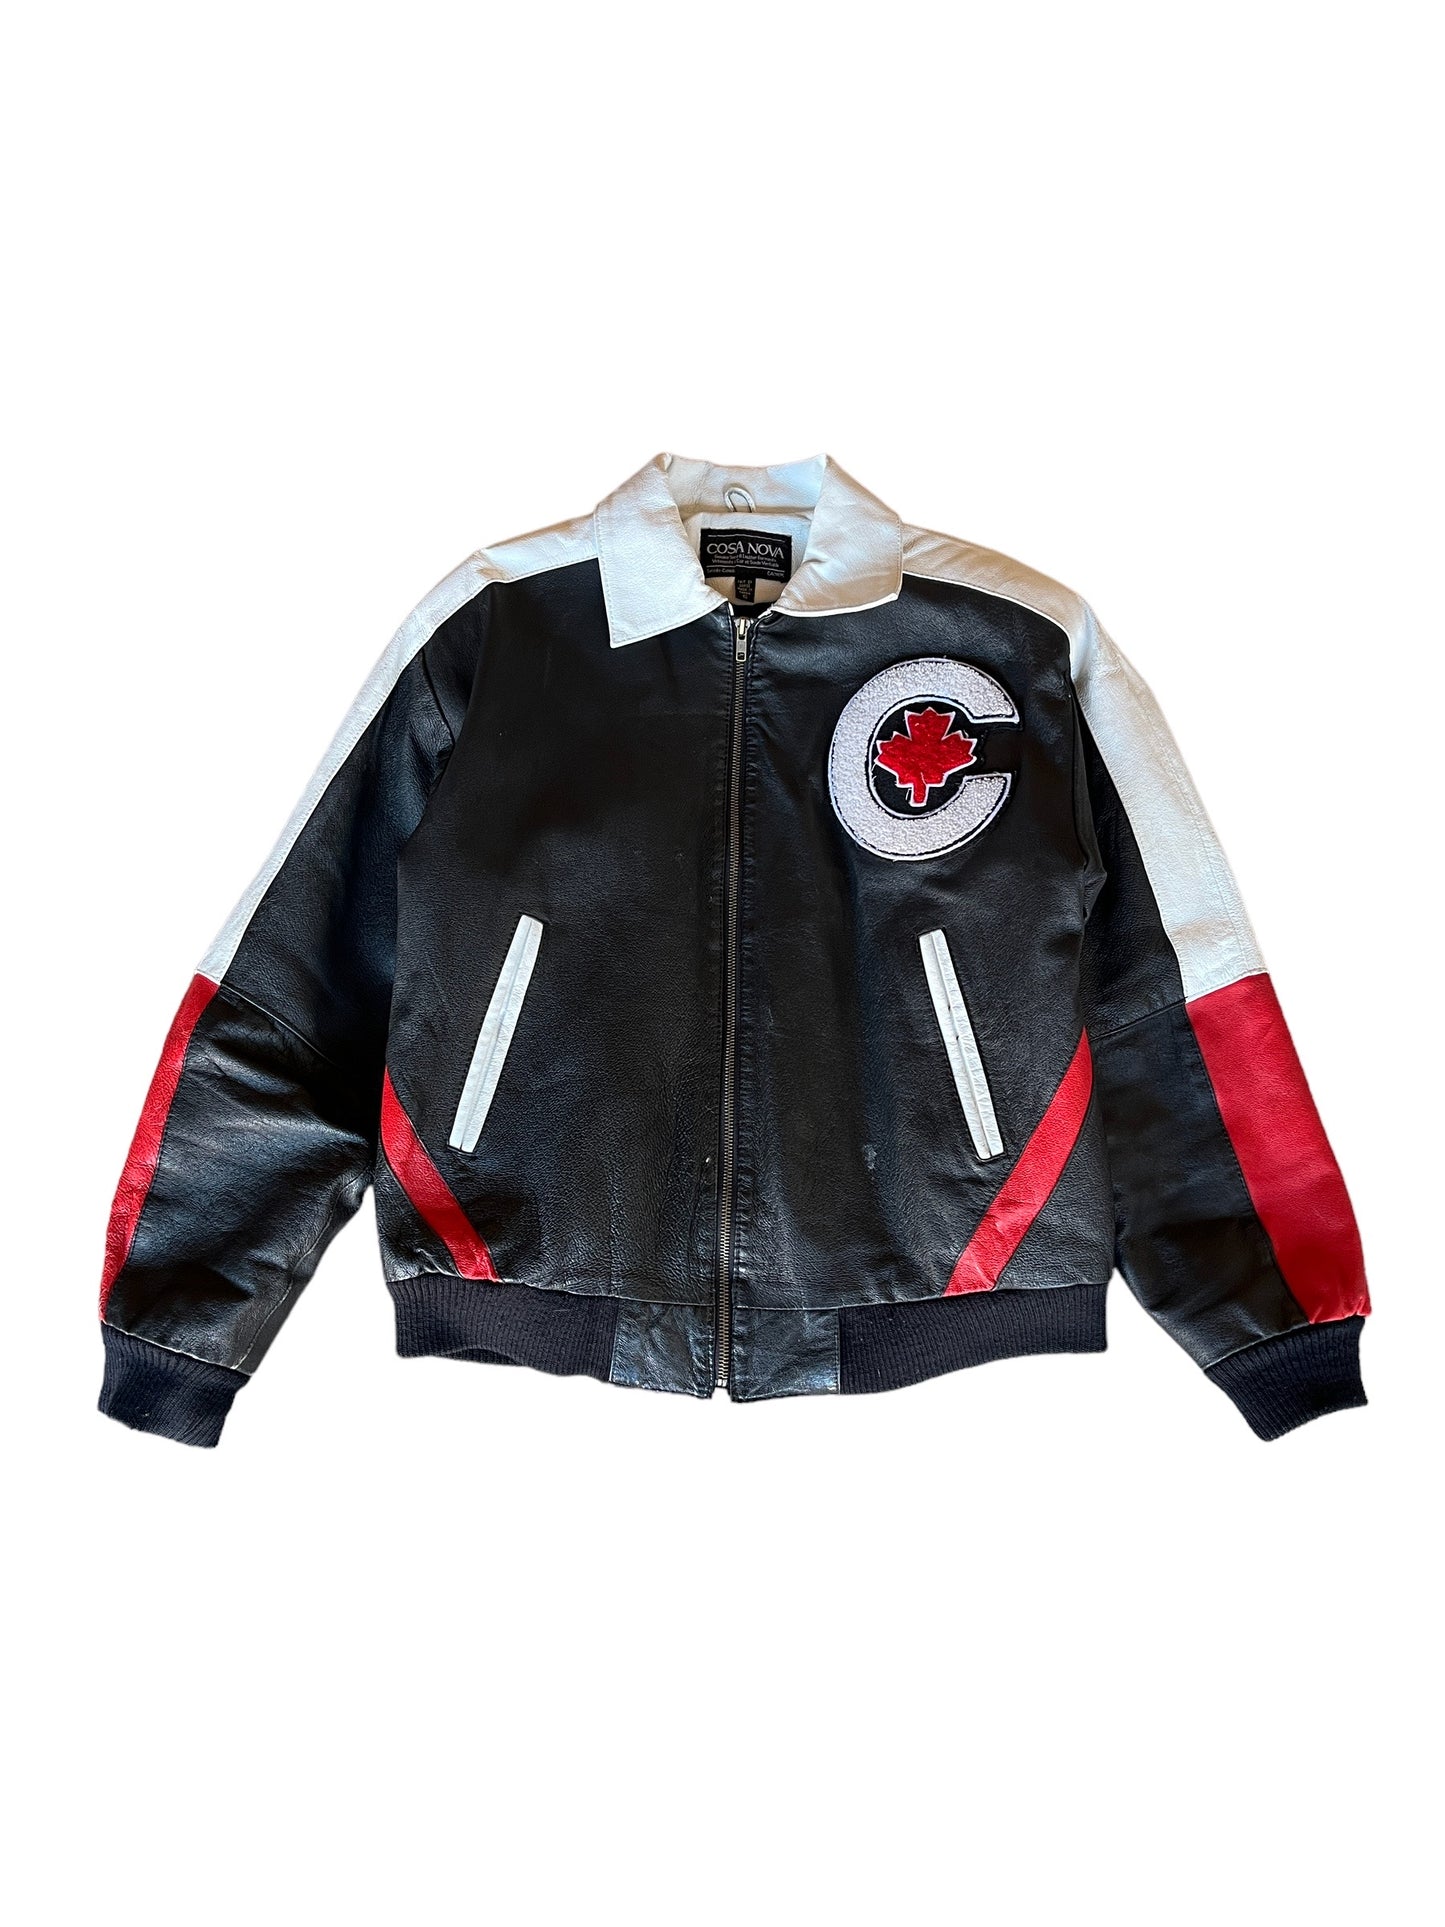 Rare Vintage 90's Casa Nova Canada Leather Jacket